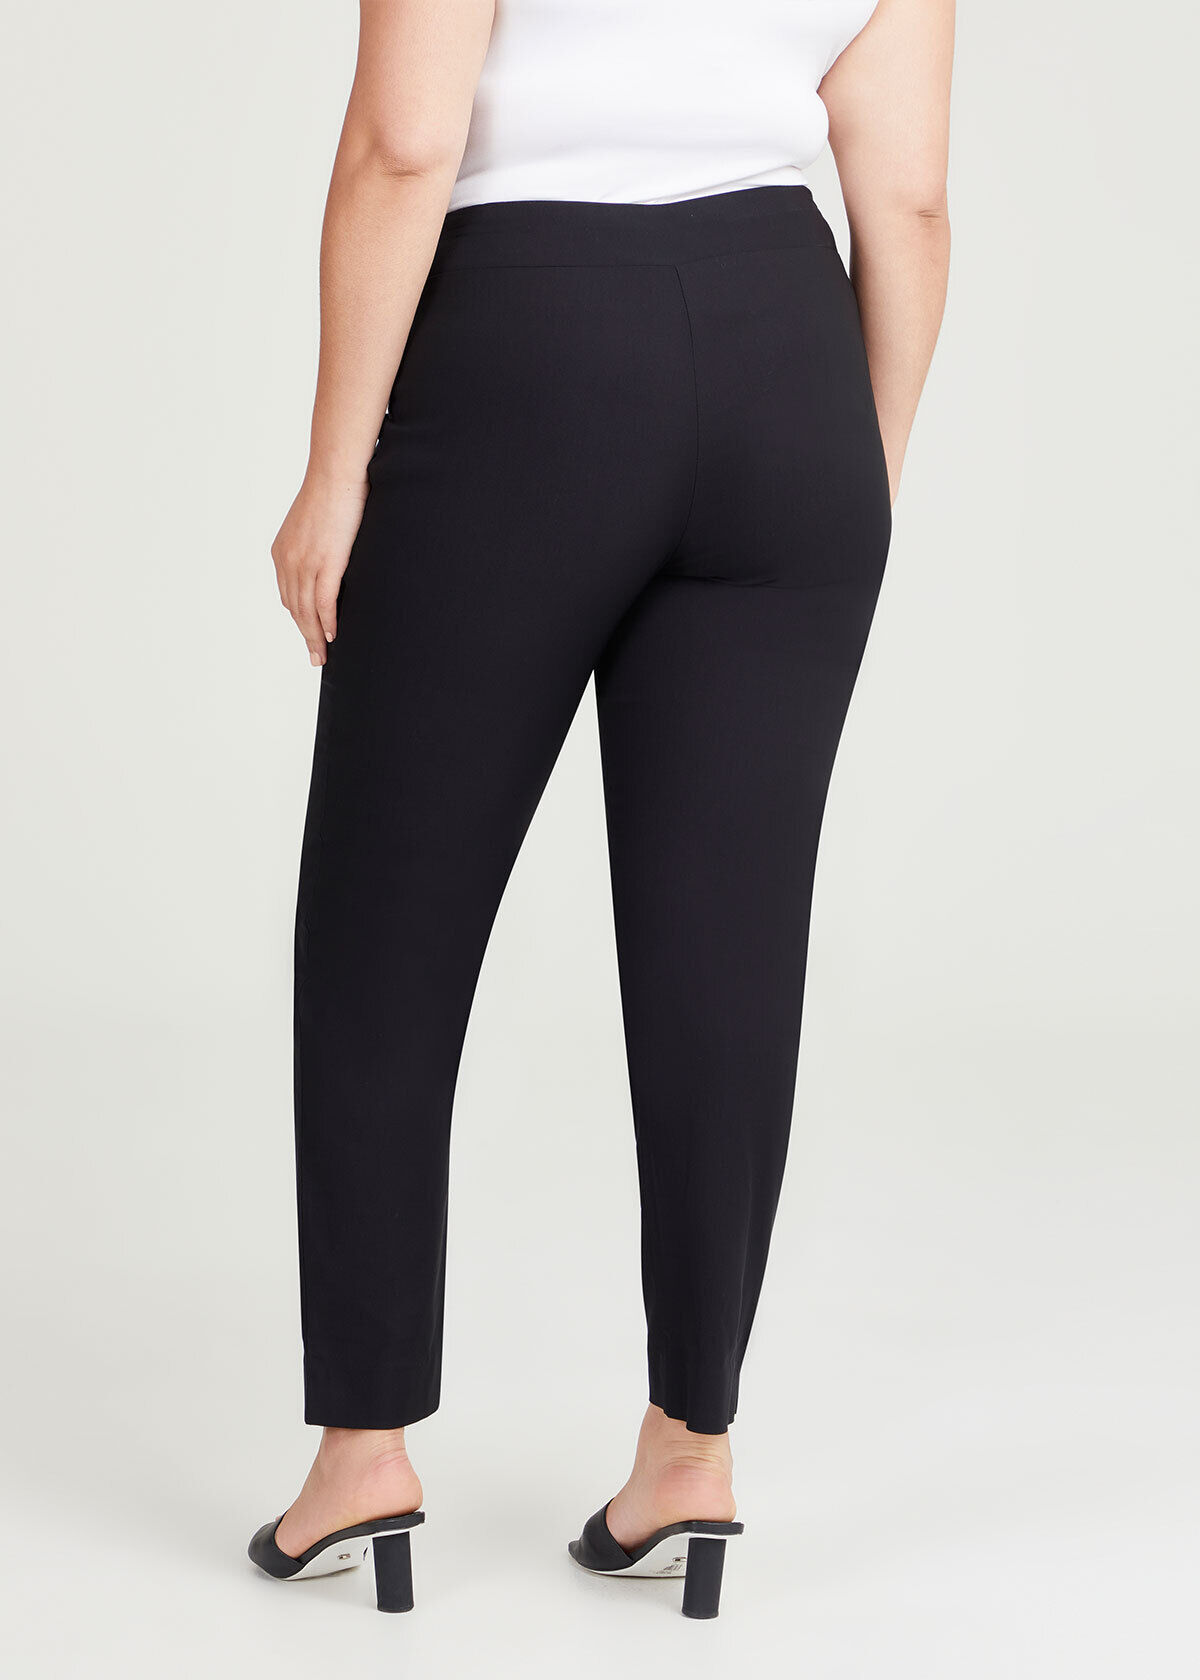 Perl Plus Size Black Jean for Women Casual High Waist Button Zipper Denim  Pants Fashion Pencil